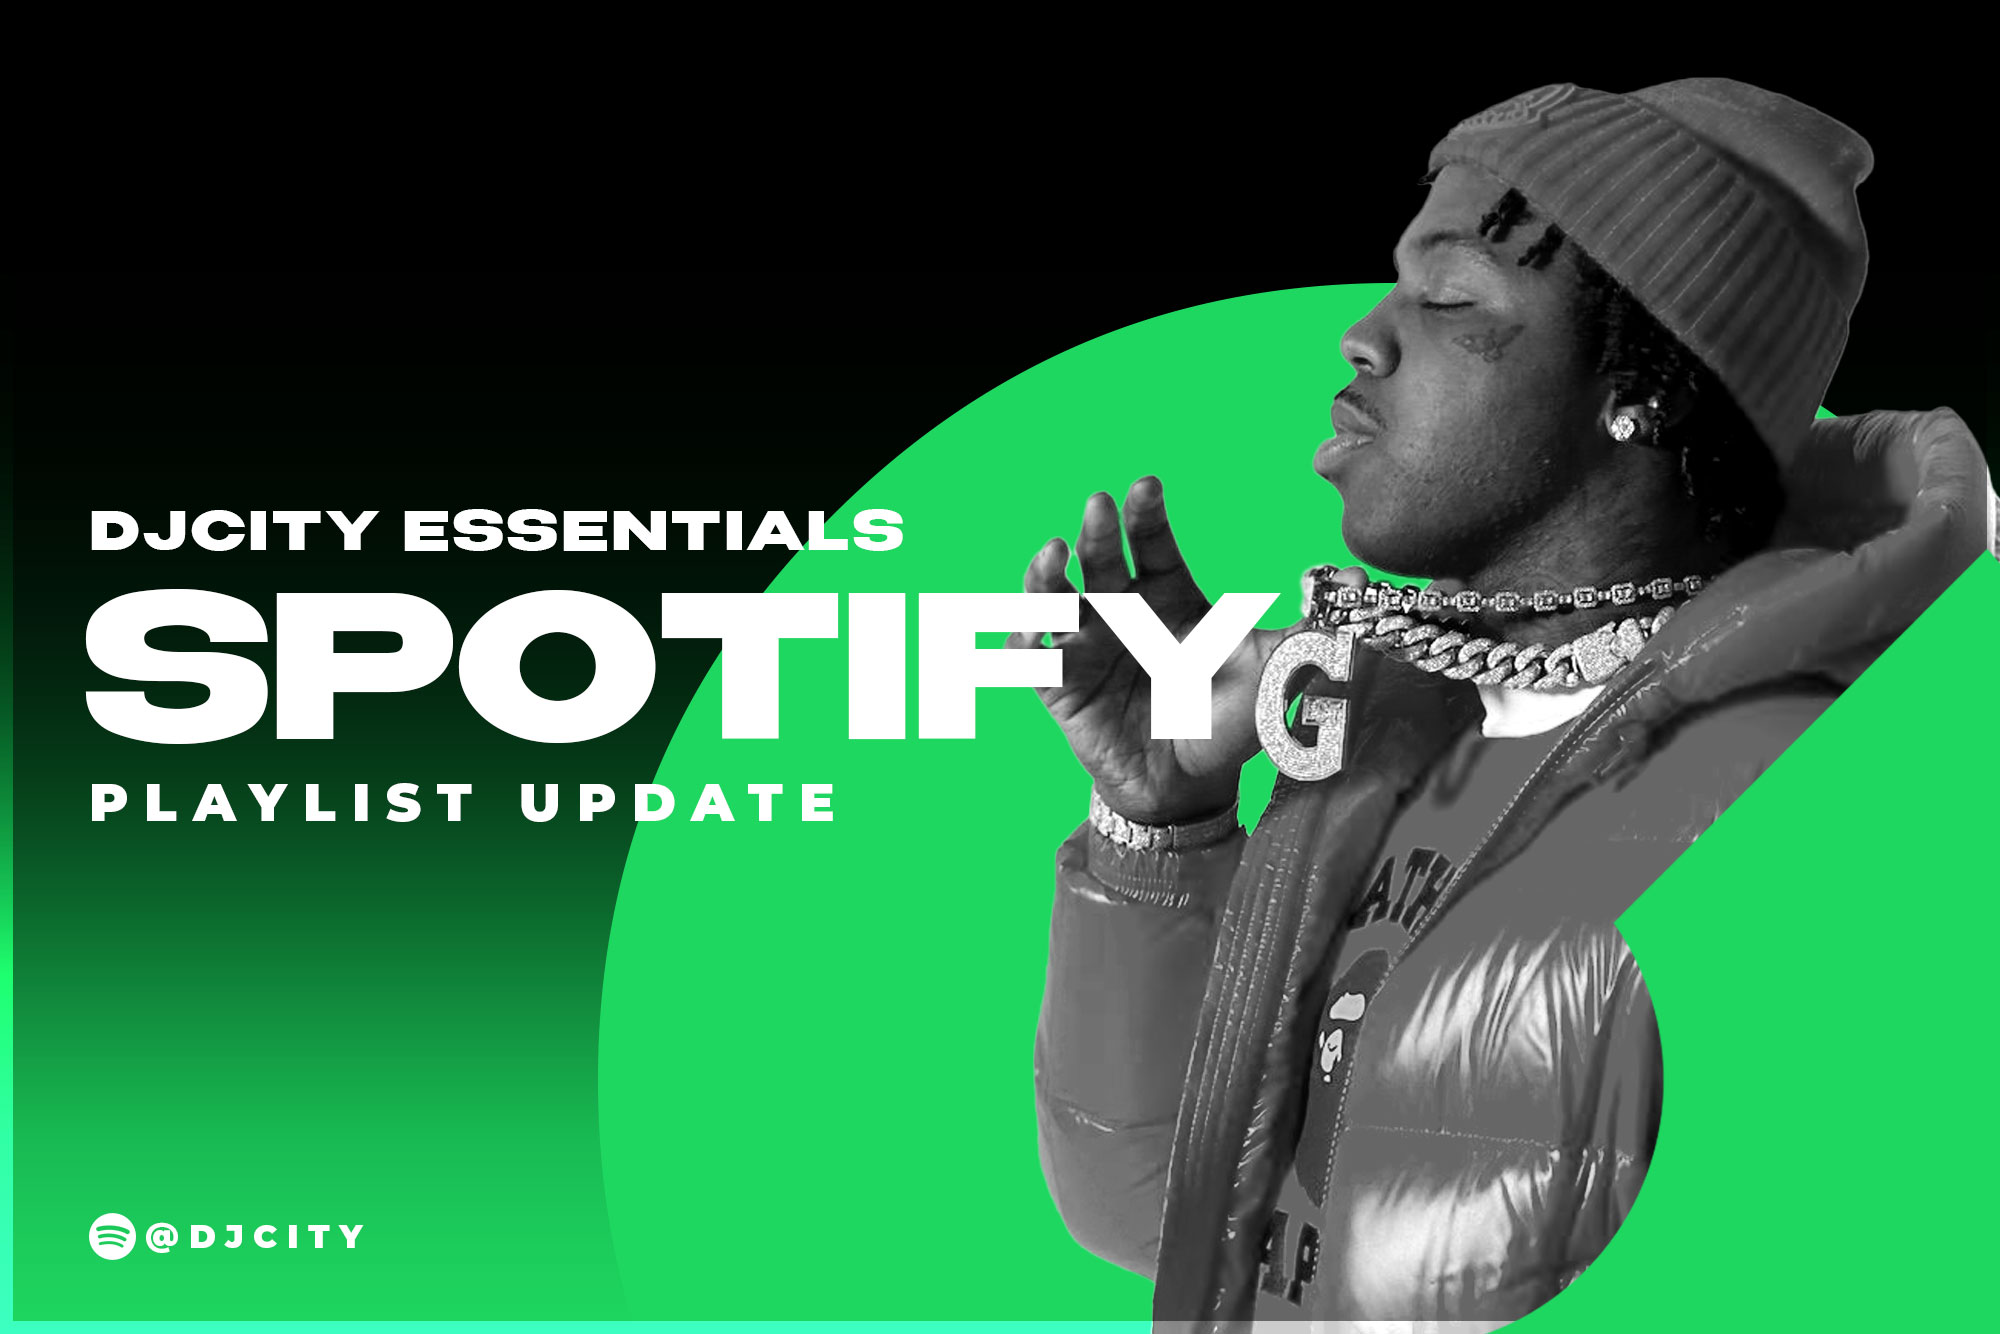 DJcity’s Spotify Playlist Update: Nov. 23